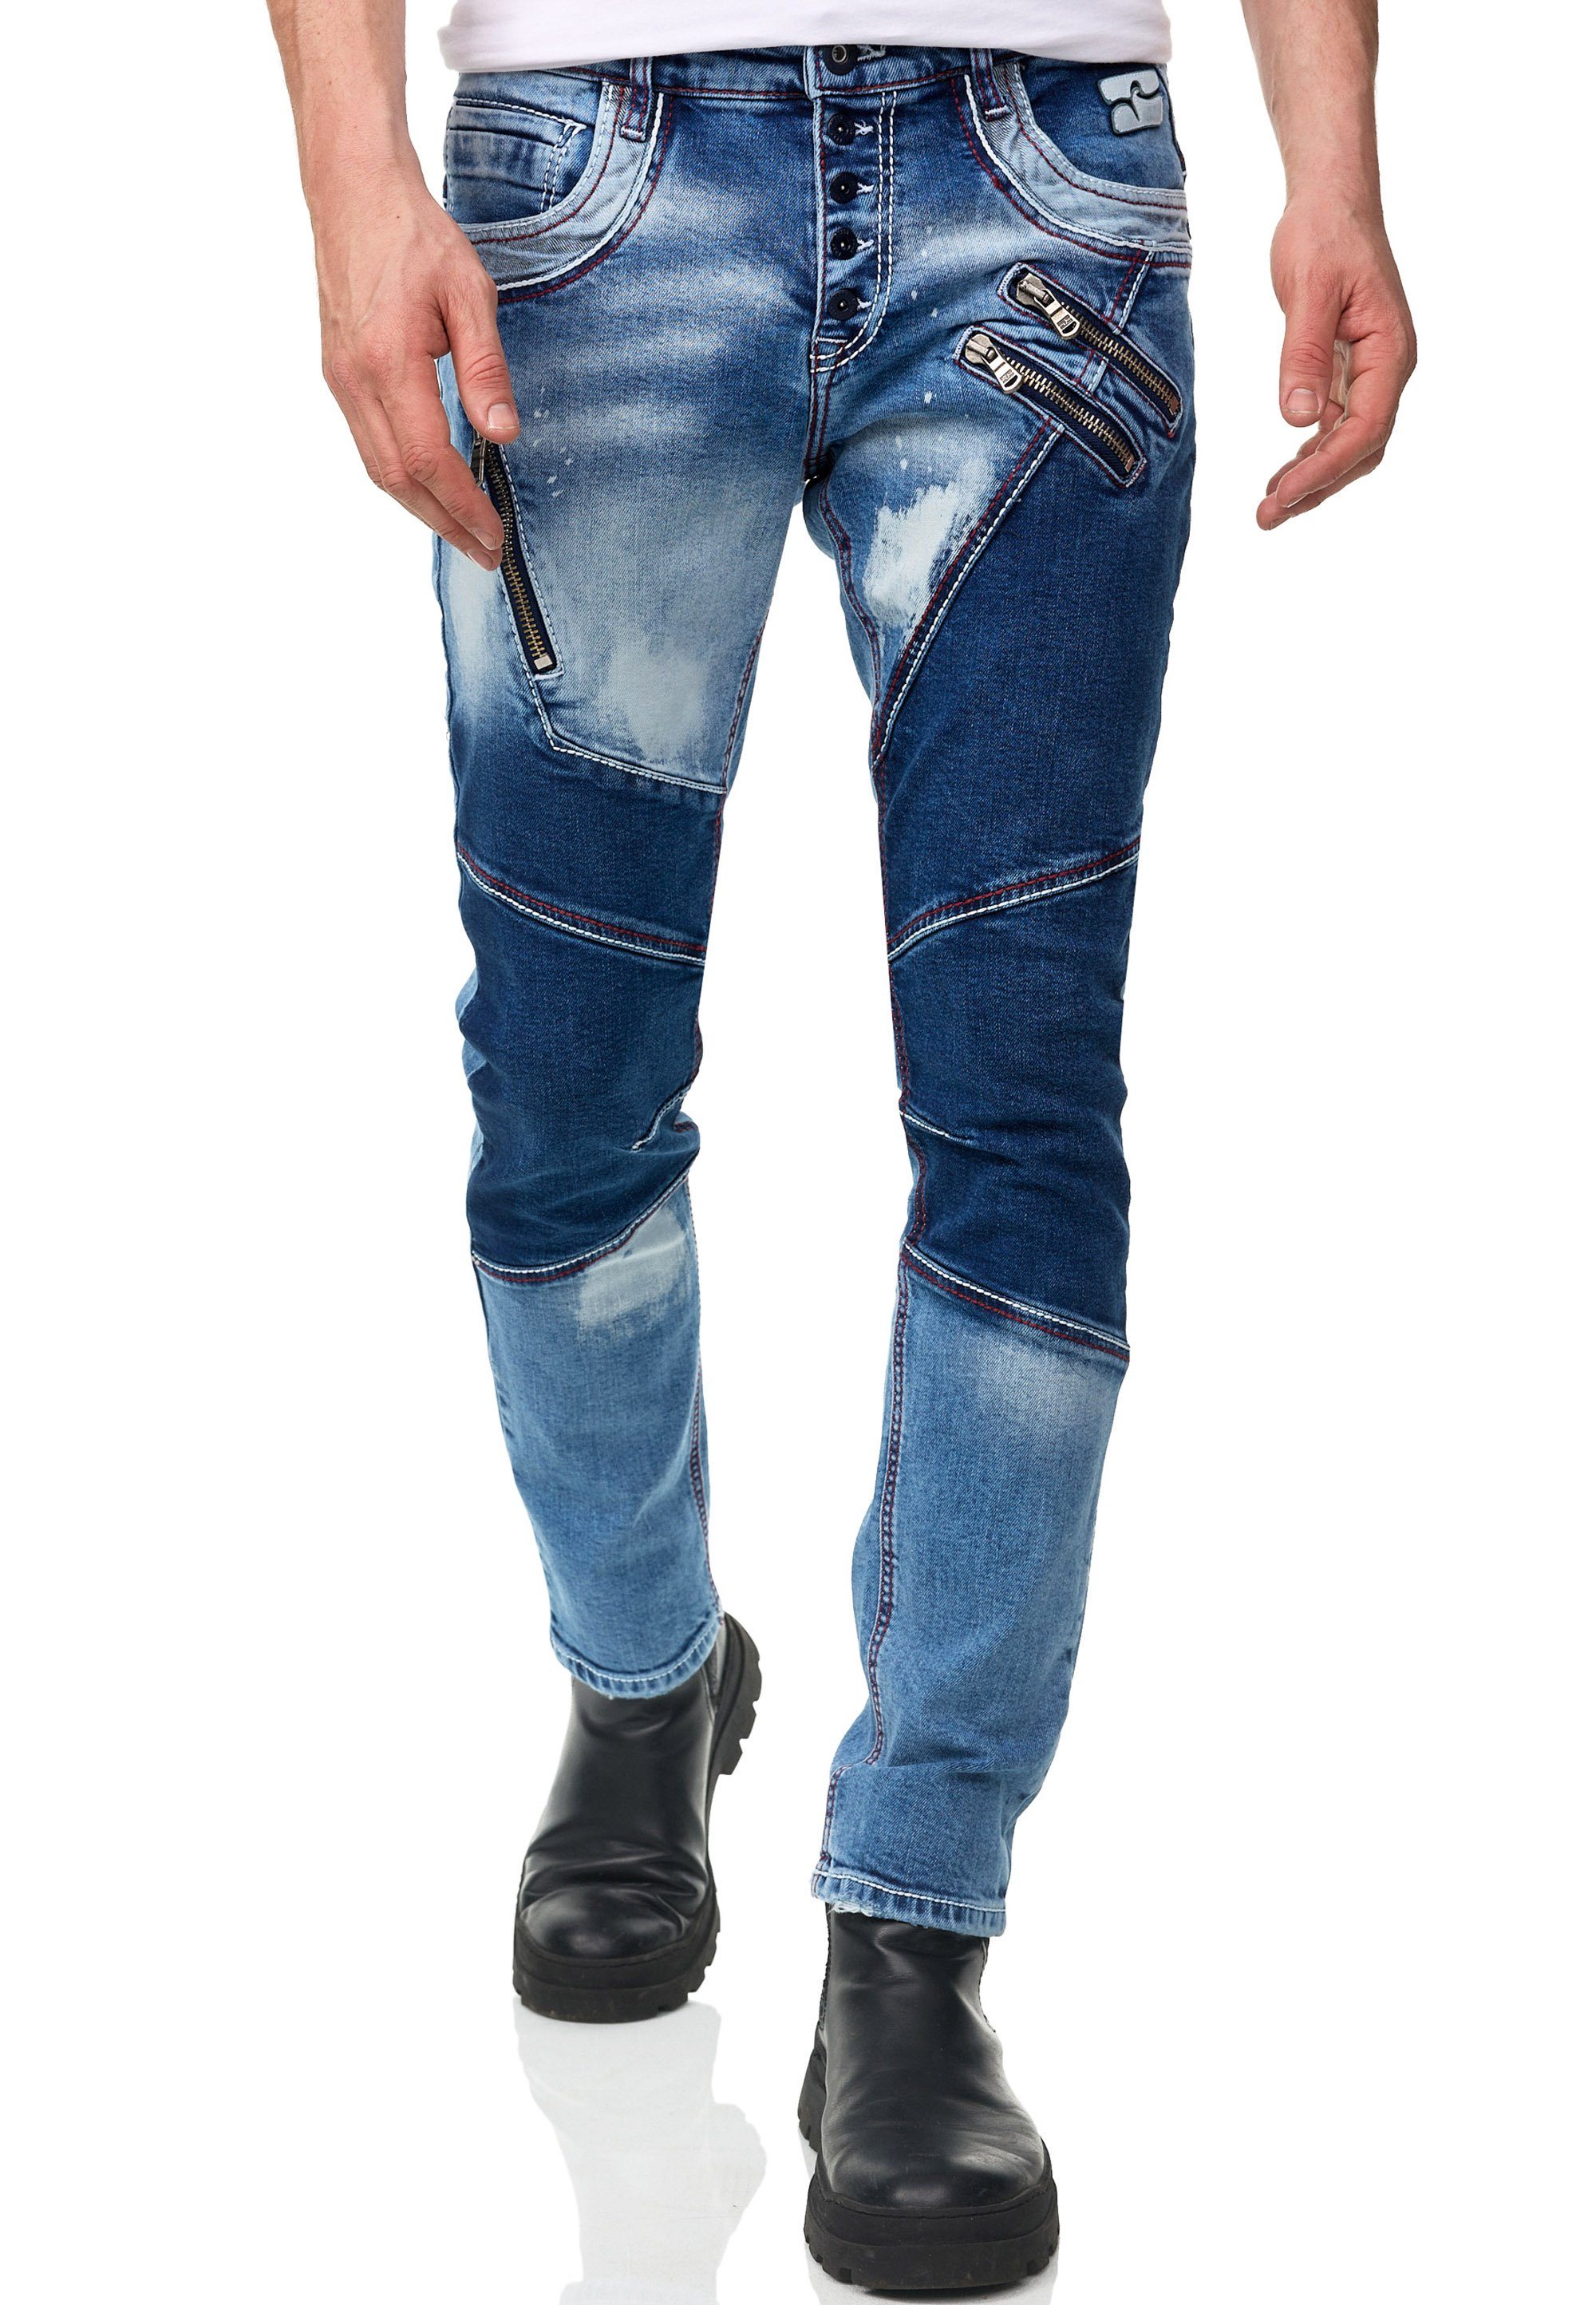 Rusty Neal Straight-Jeans URUMA mit trendigen Zierelementen blau-denim